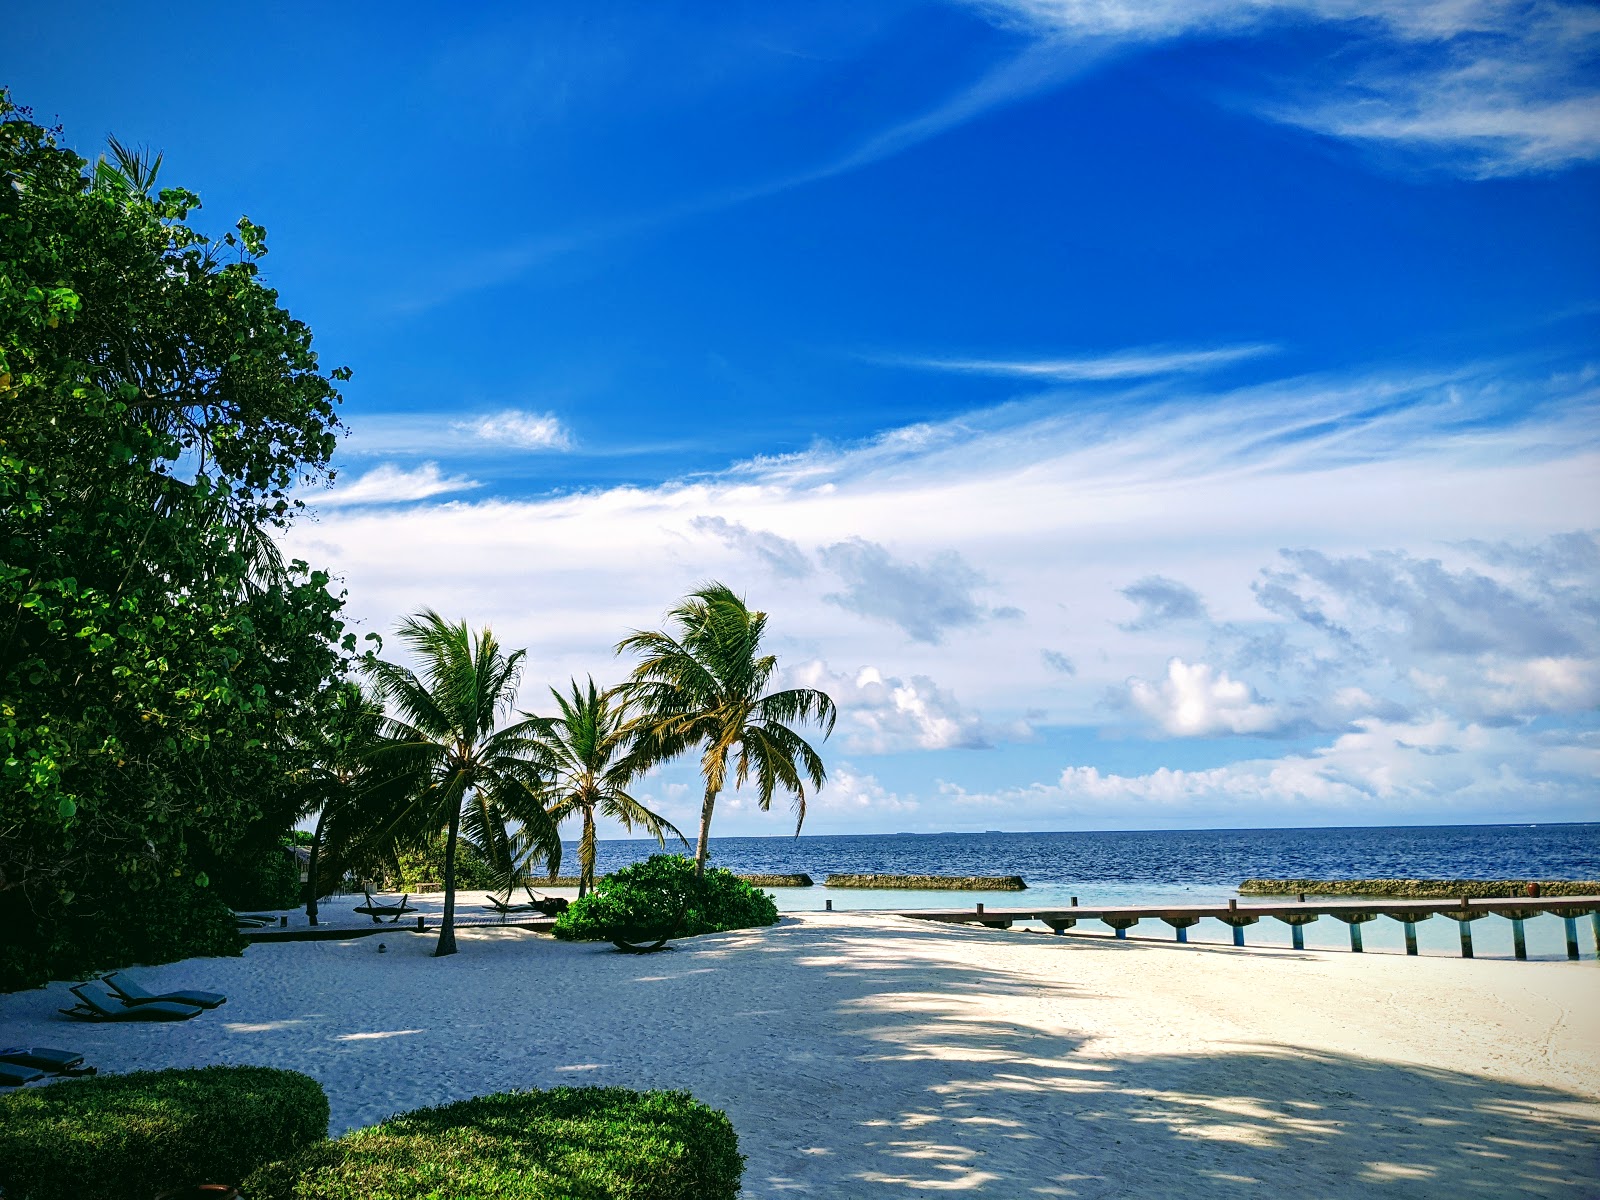 Foto av Coco Bodu Hithi Resort med vit sand yta